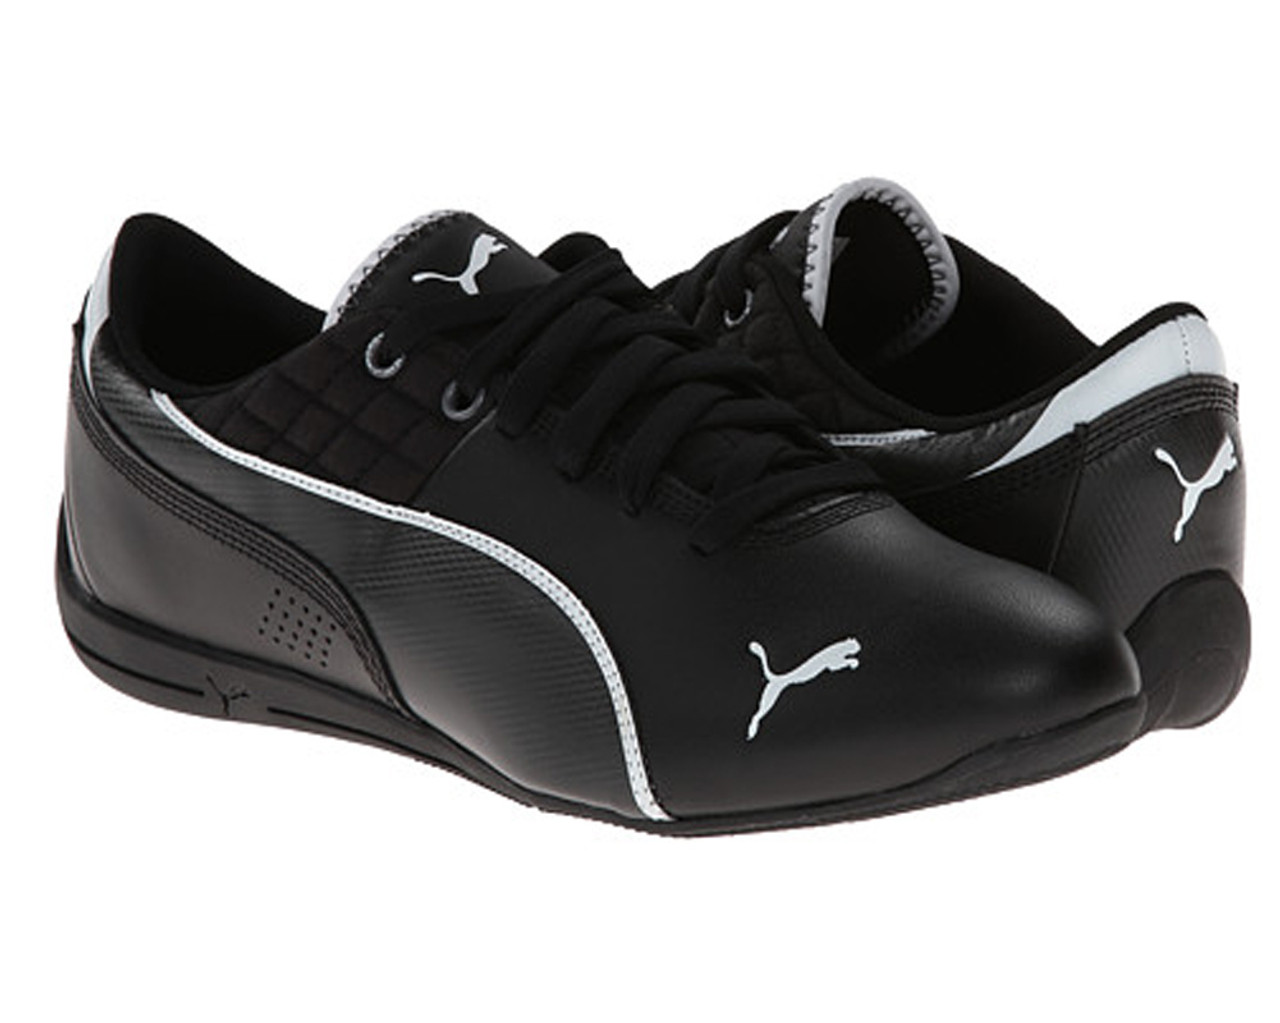 Puma Men's Drift Cat 6 Sneakers - Black | Discount Puma Mens Casual & More  - Shoolu.com | Shoolu.com